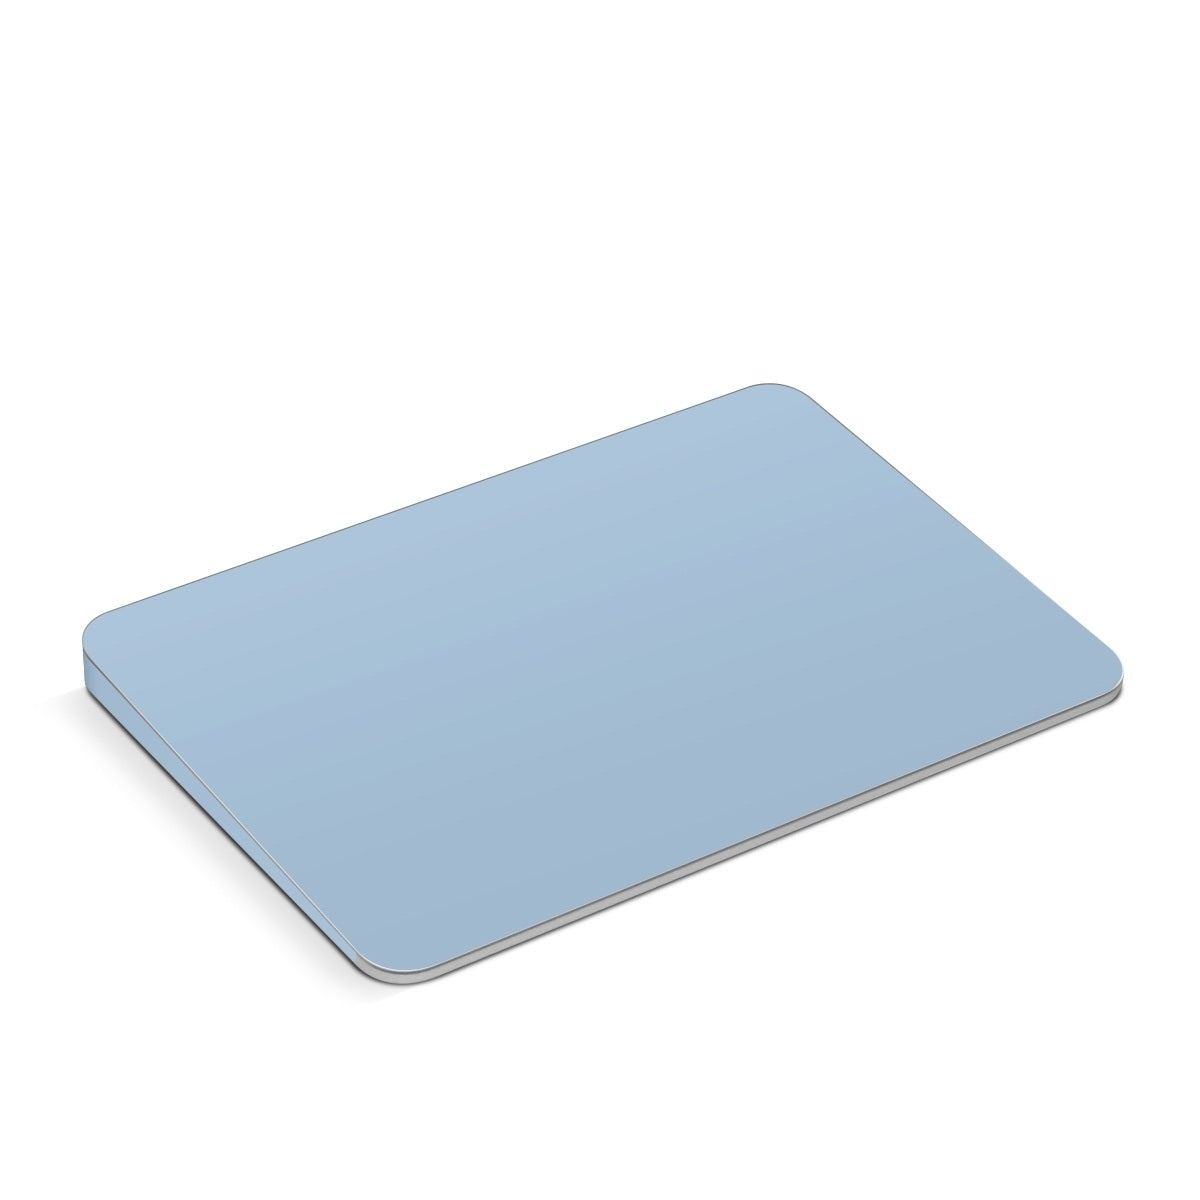 Solid State Blue Mist - Apple Magic Trackpad Skin